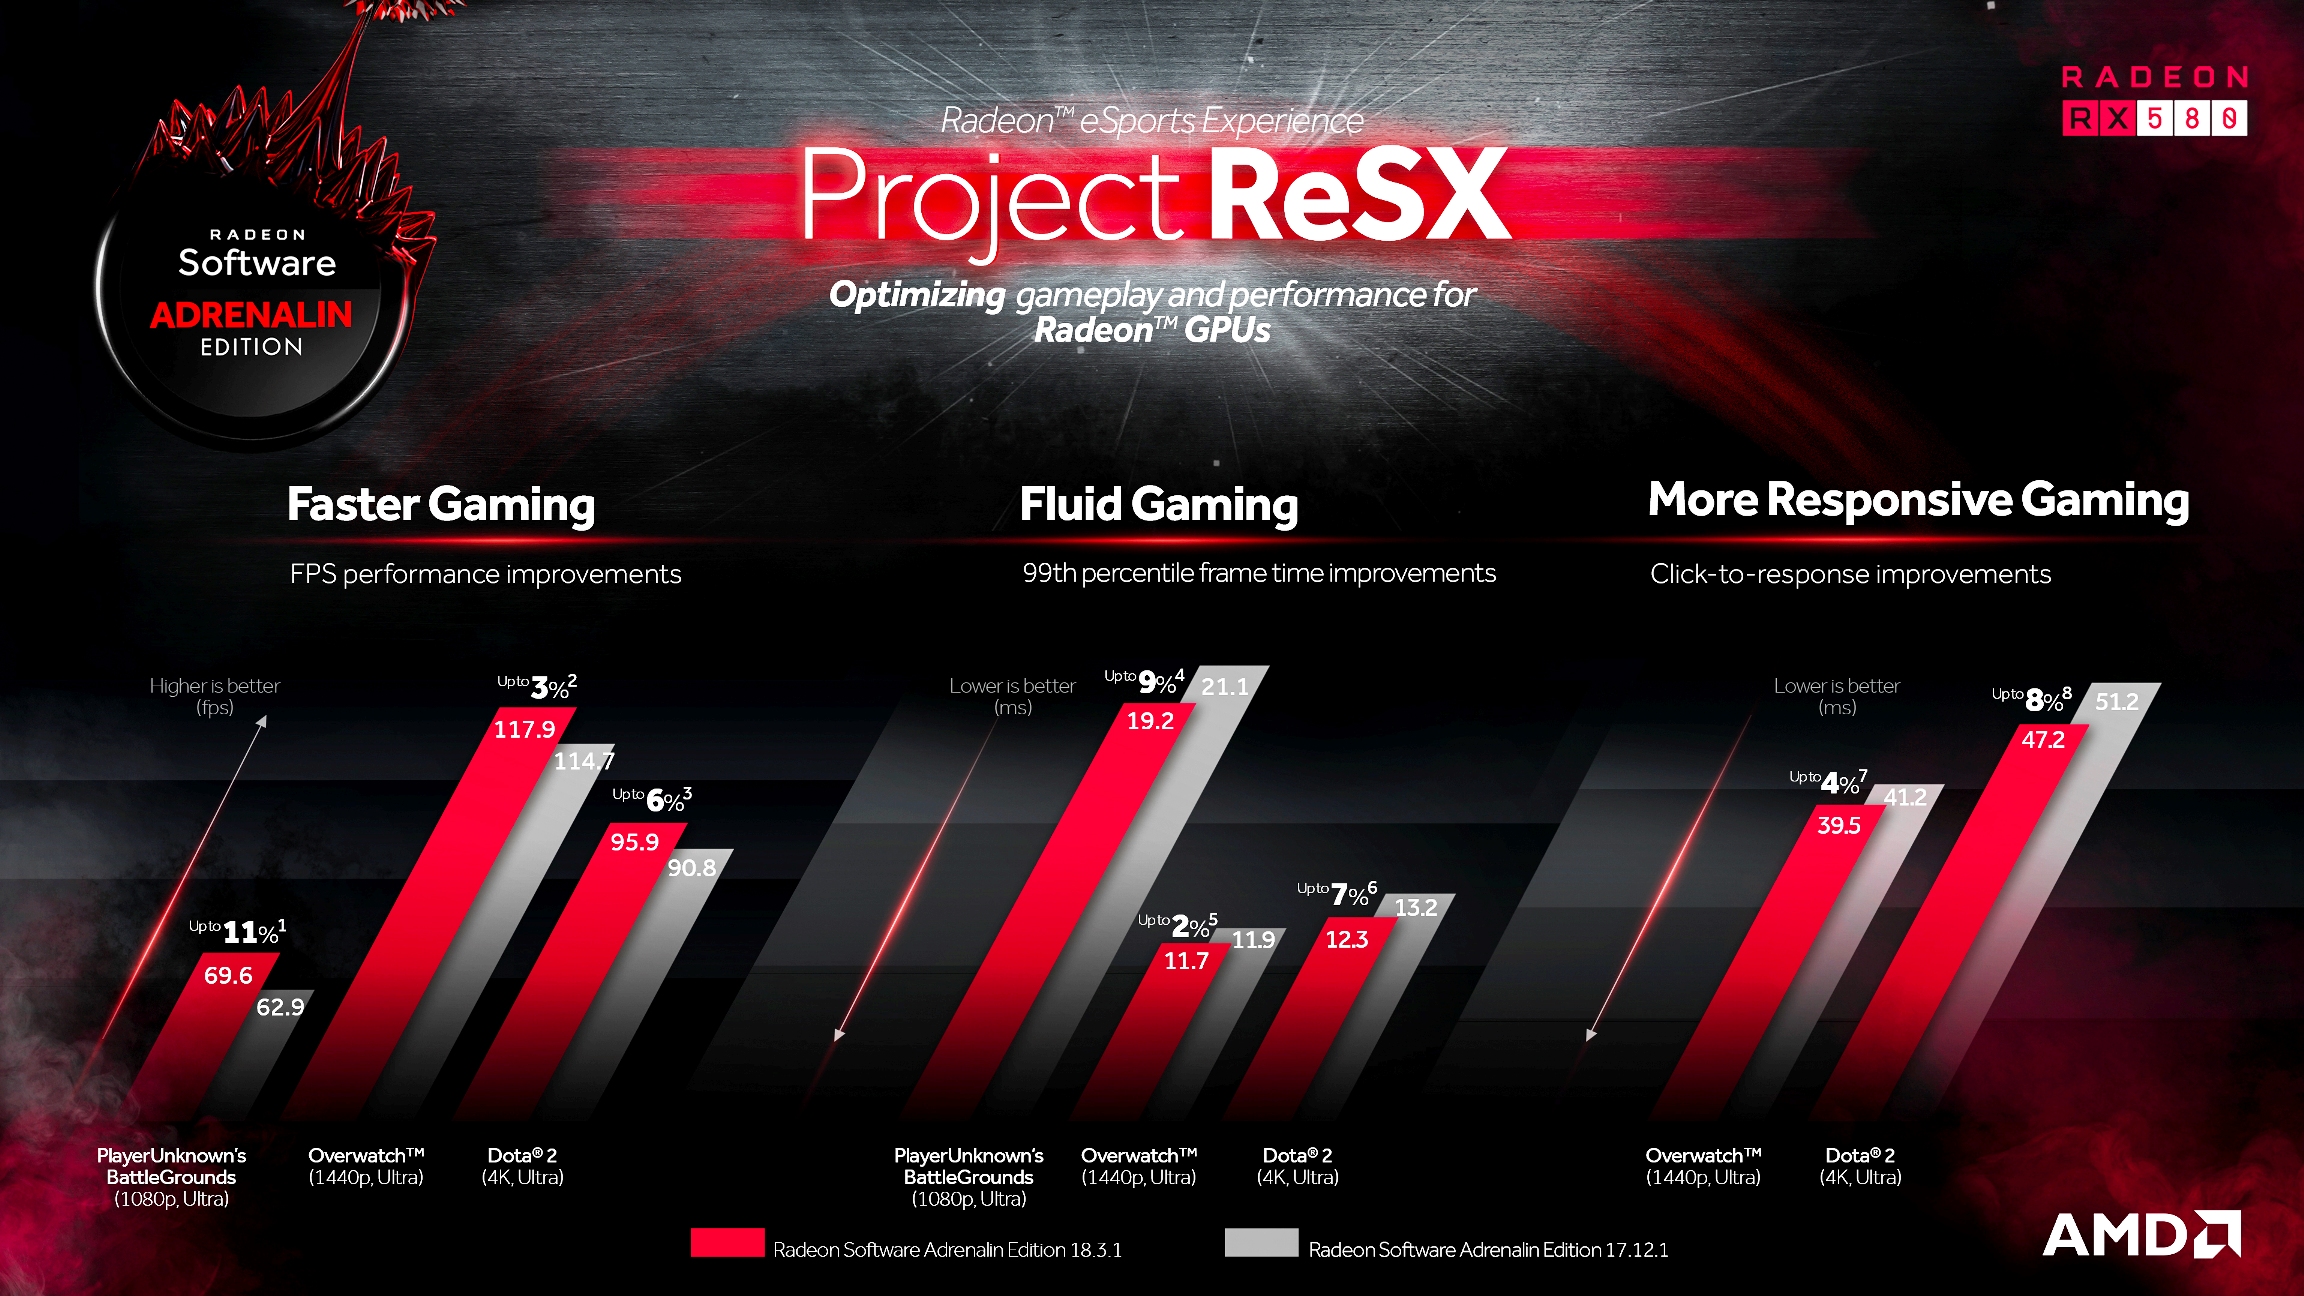 project resx nc AMD ปล่อยไดร์เวอร์เวอร์ชั่นใหม่ AMD Radeon Software 18.3.1 มาพร้อมกับ AMD’s Project ReSX ที่เน้นความเป็น eSports ตอบโจทย์ผู้เล่นเกมส์มากยิ่งขึ้น 